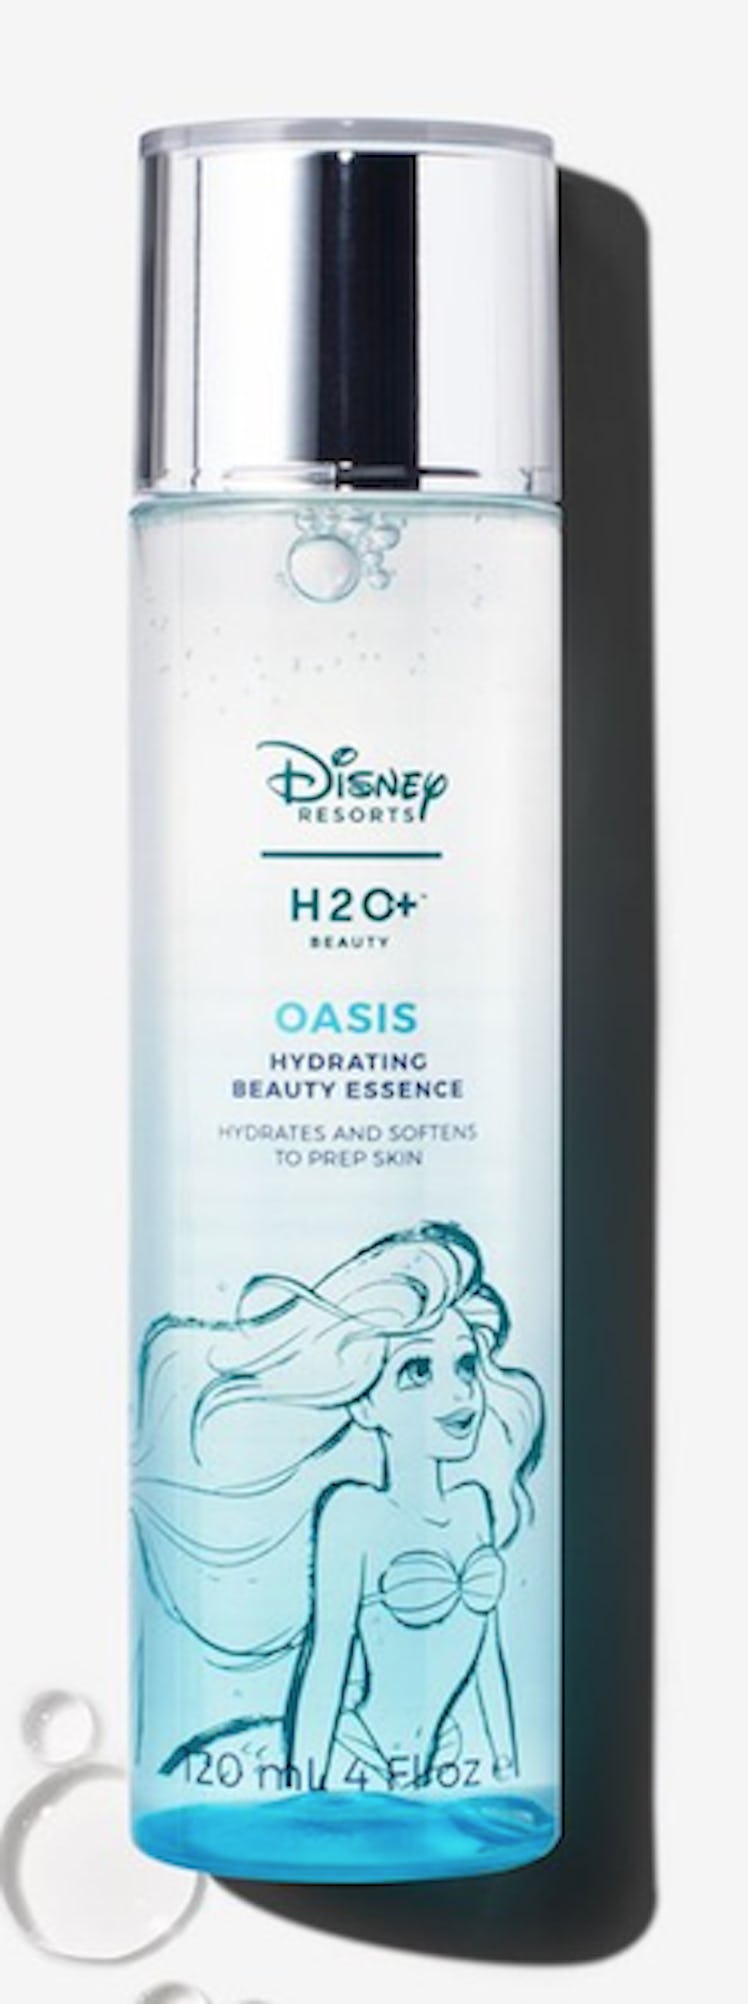 Oasis Hydrating Beauty Essence